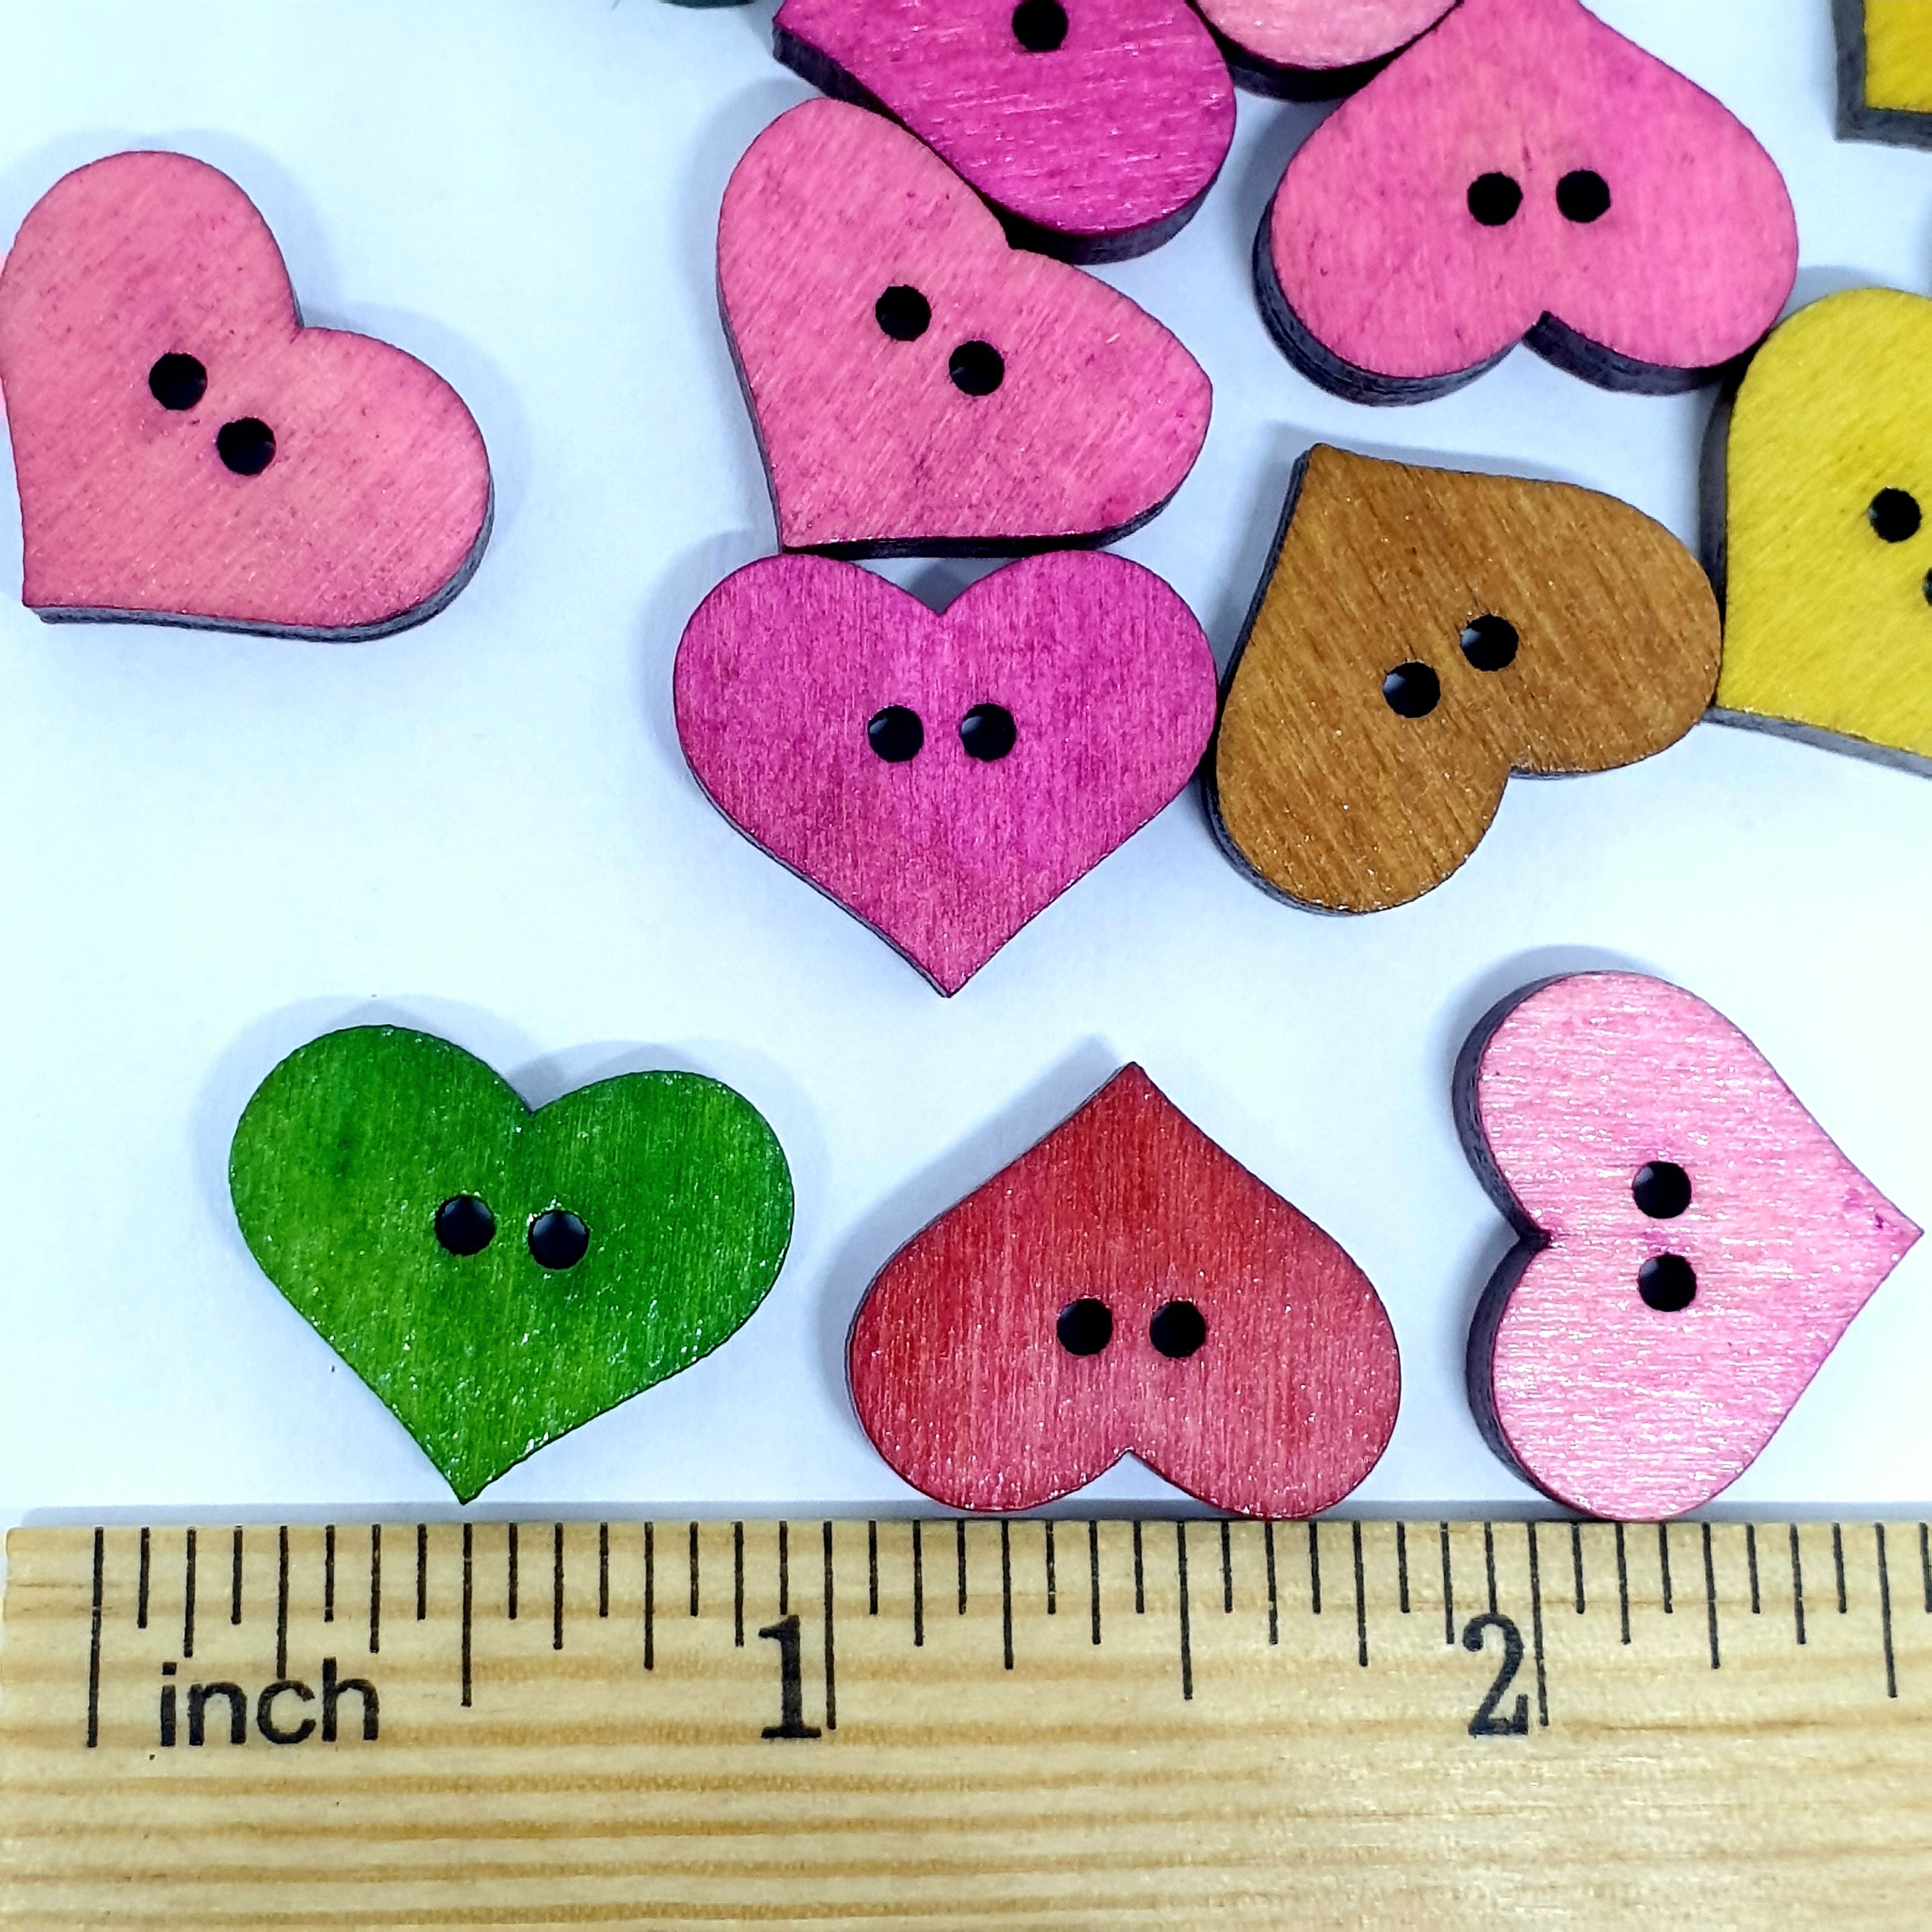 MajorCrafts 48pcs 20mm Randomly Mixed Colours 2 Holes Heart Shaped Wooden Sewing Buttons